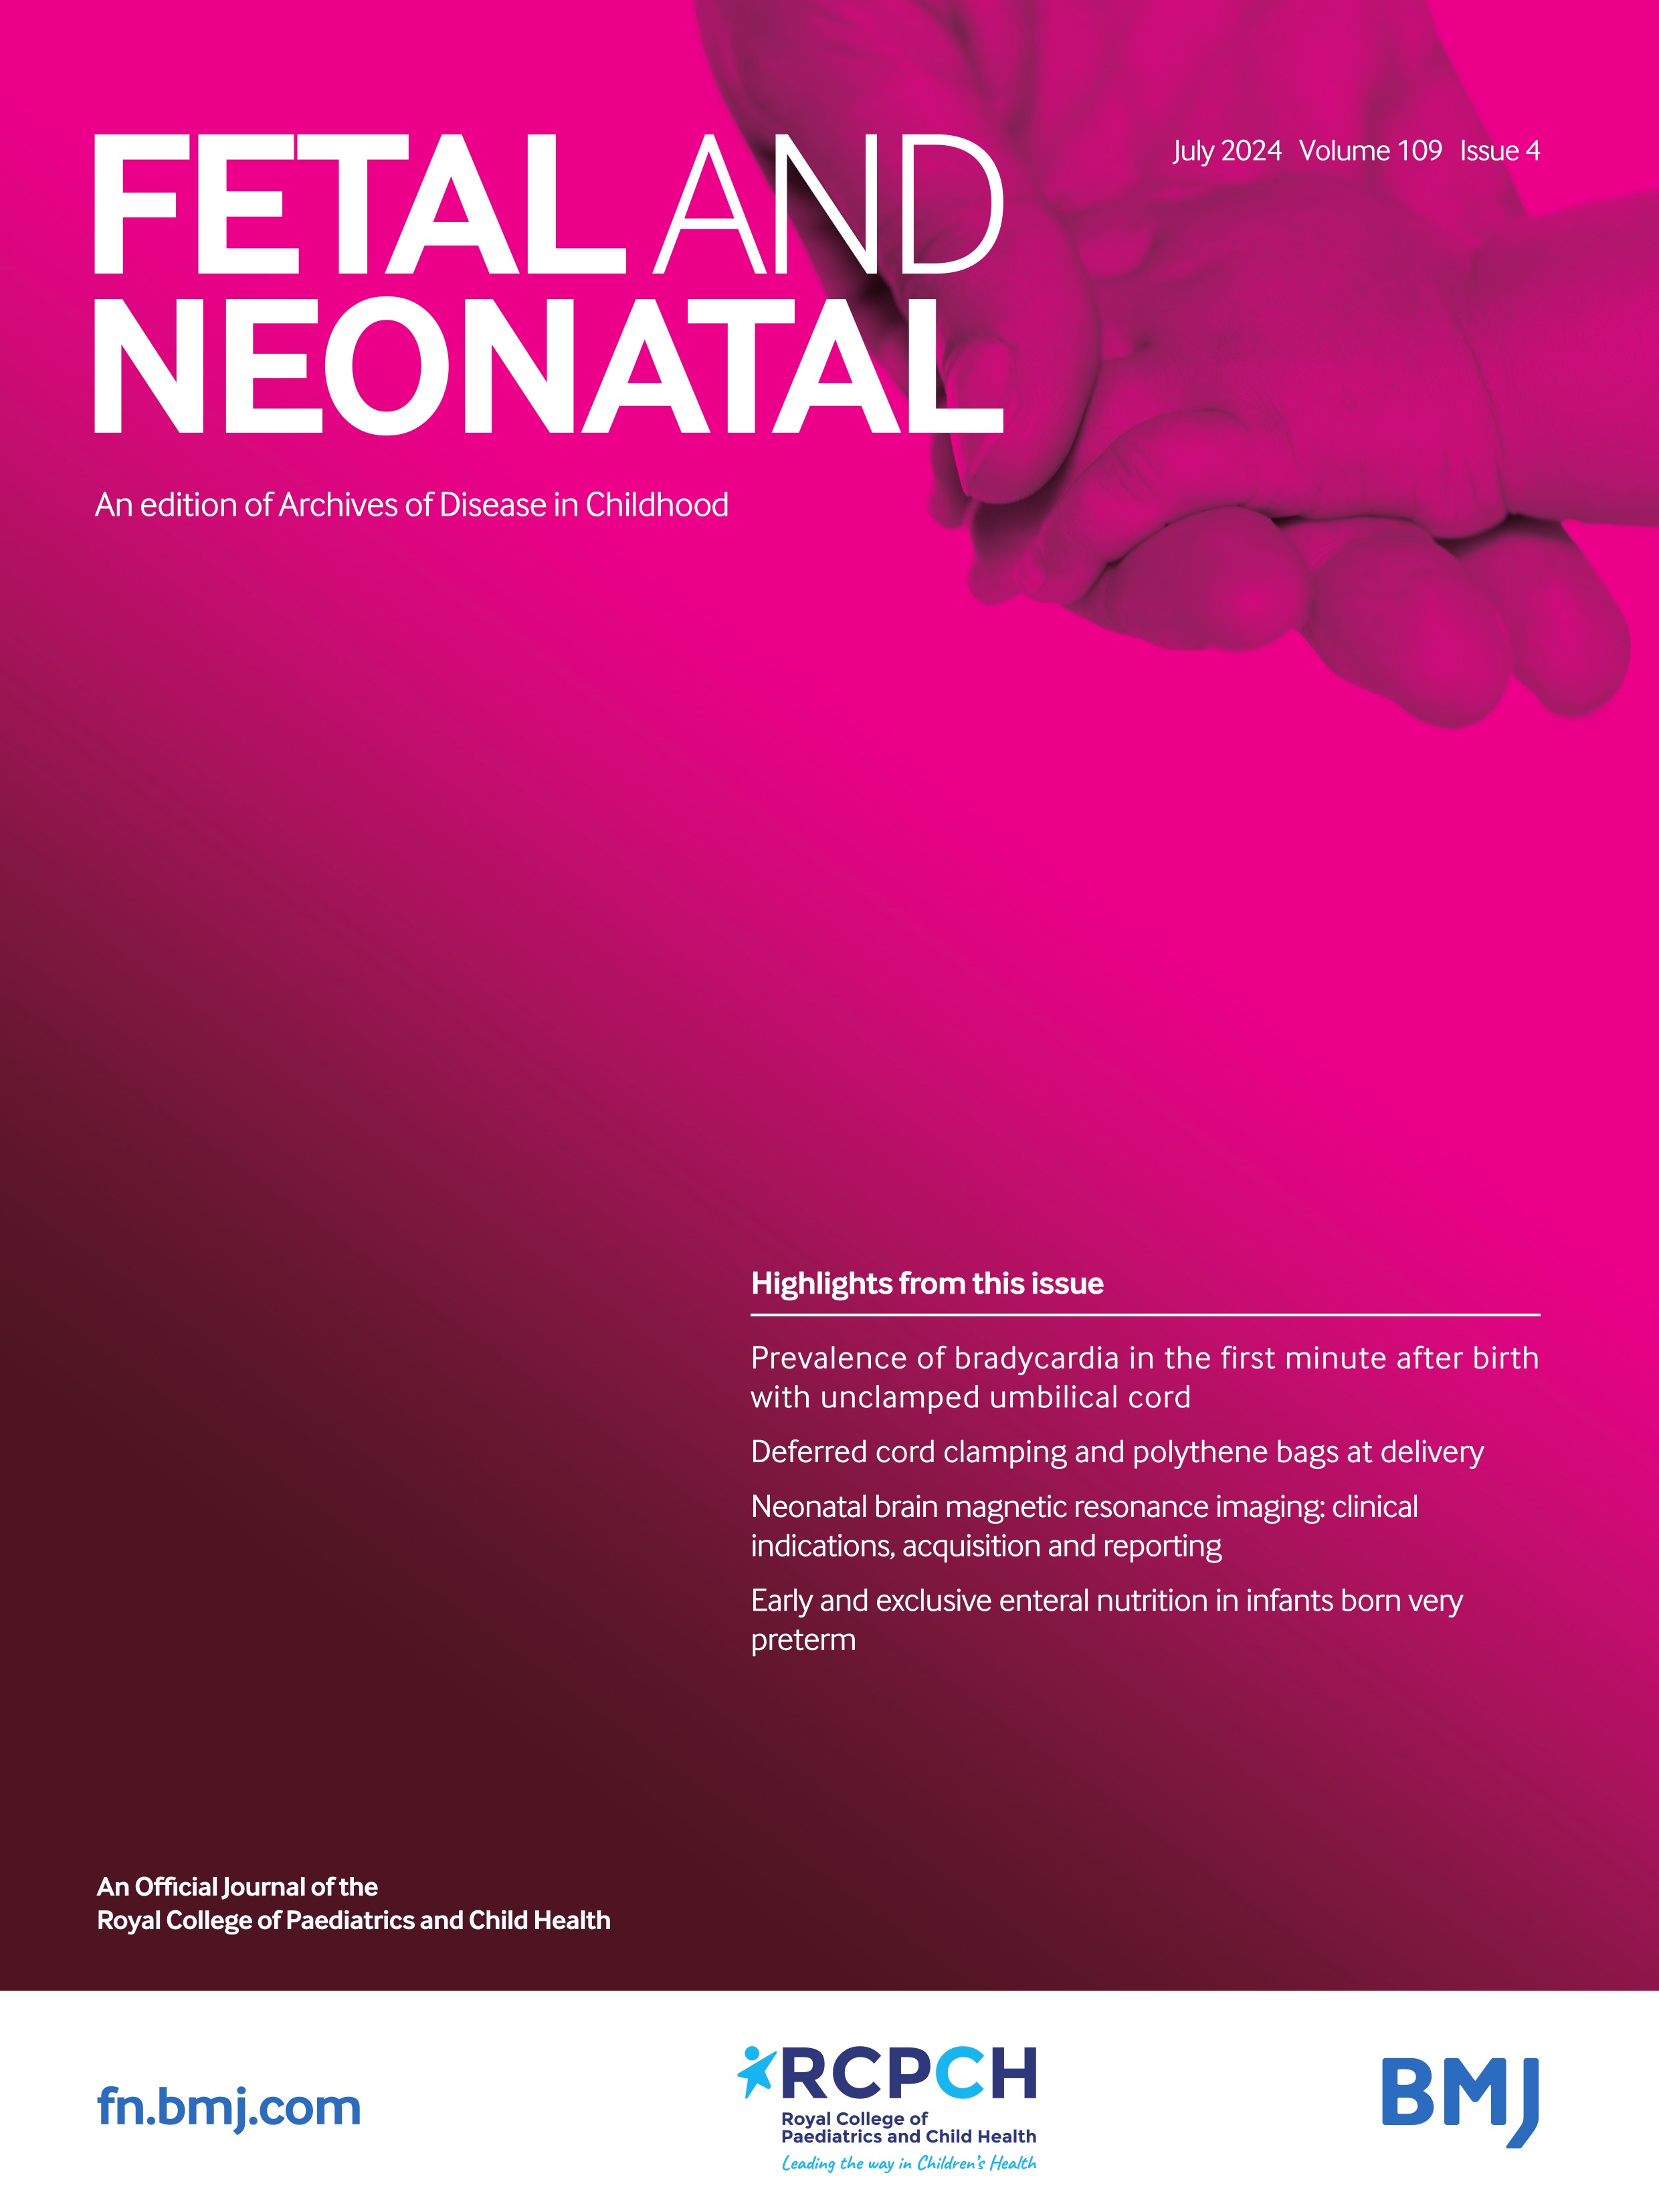 Fetal single ventricle journey to first postnatal procedure: a multicentre UK cohort study